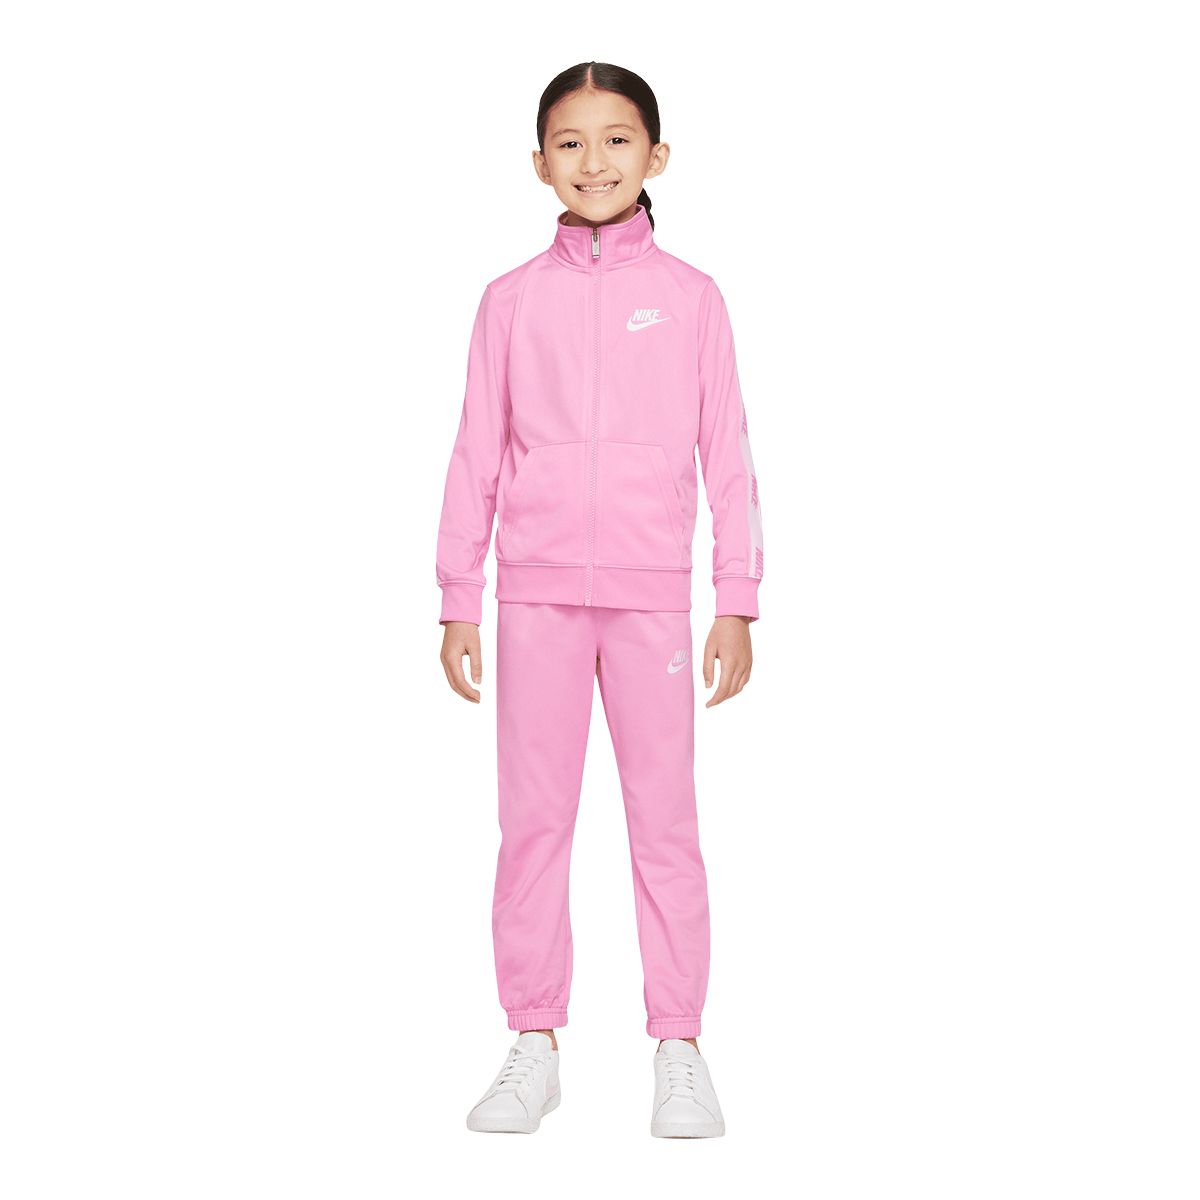 Nike Toddler Girls' 4-6X Printed Club Jumpsuit